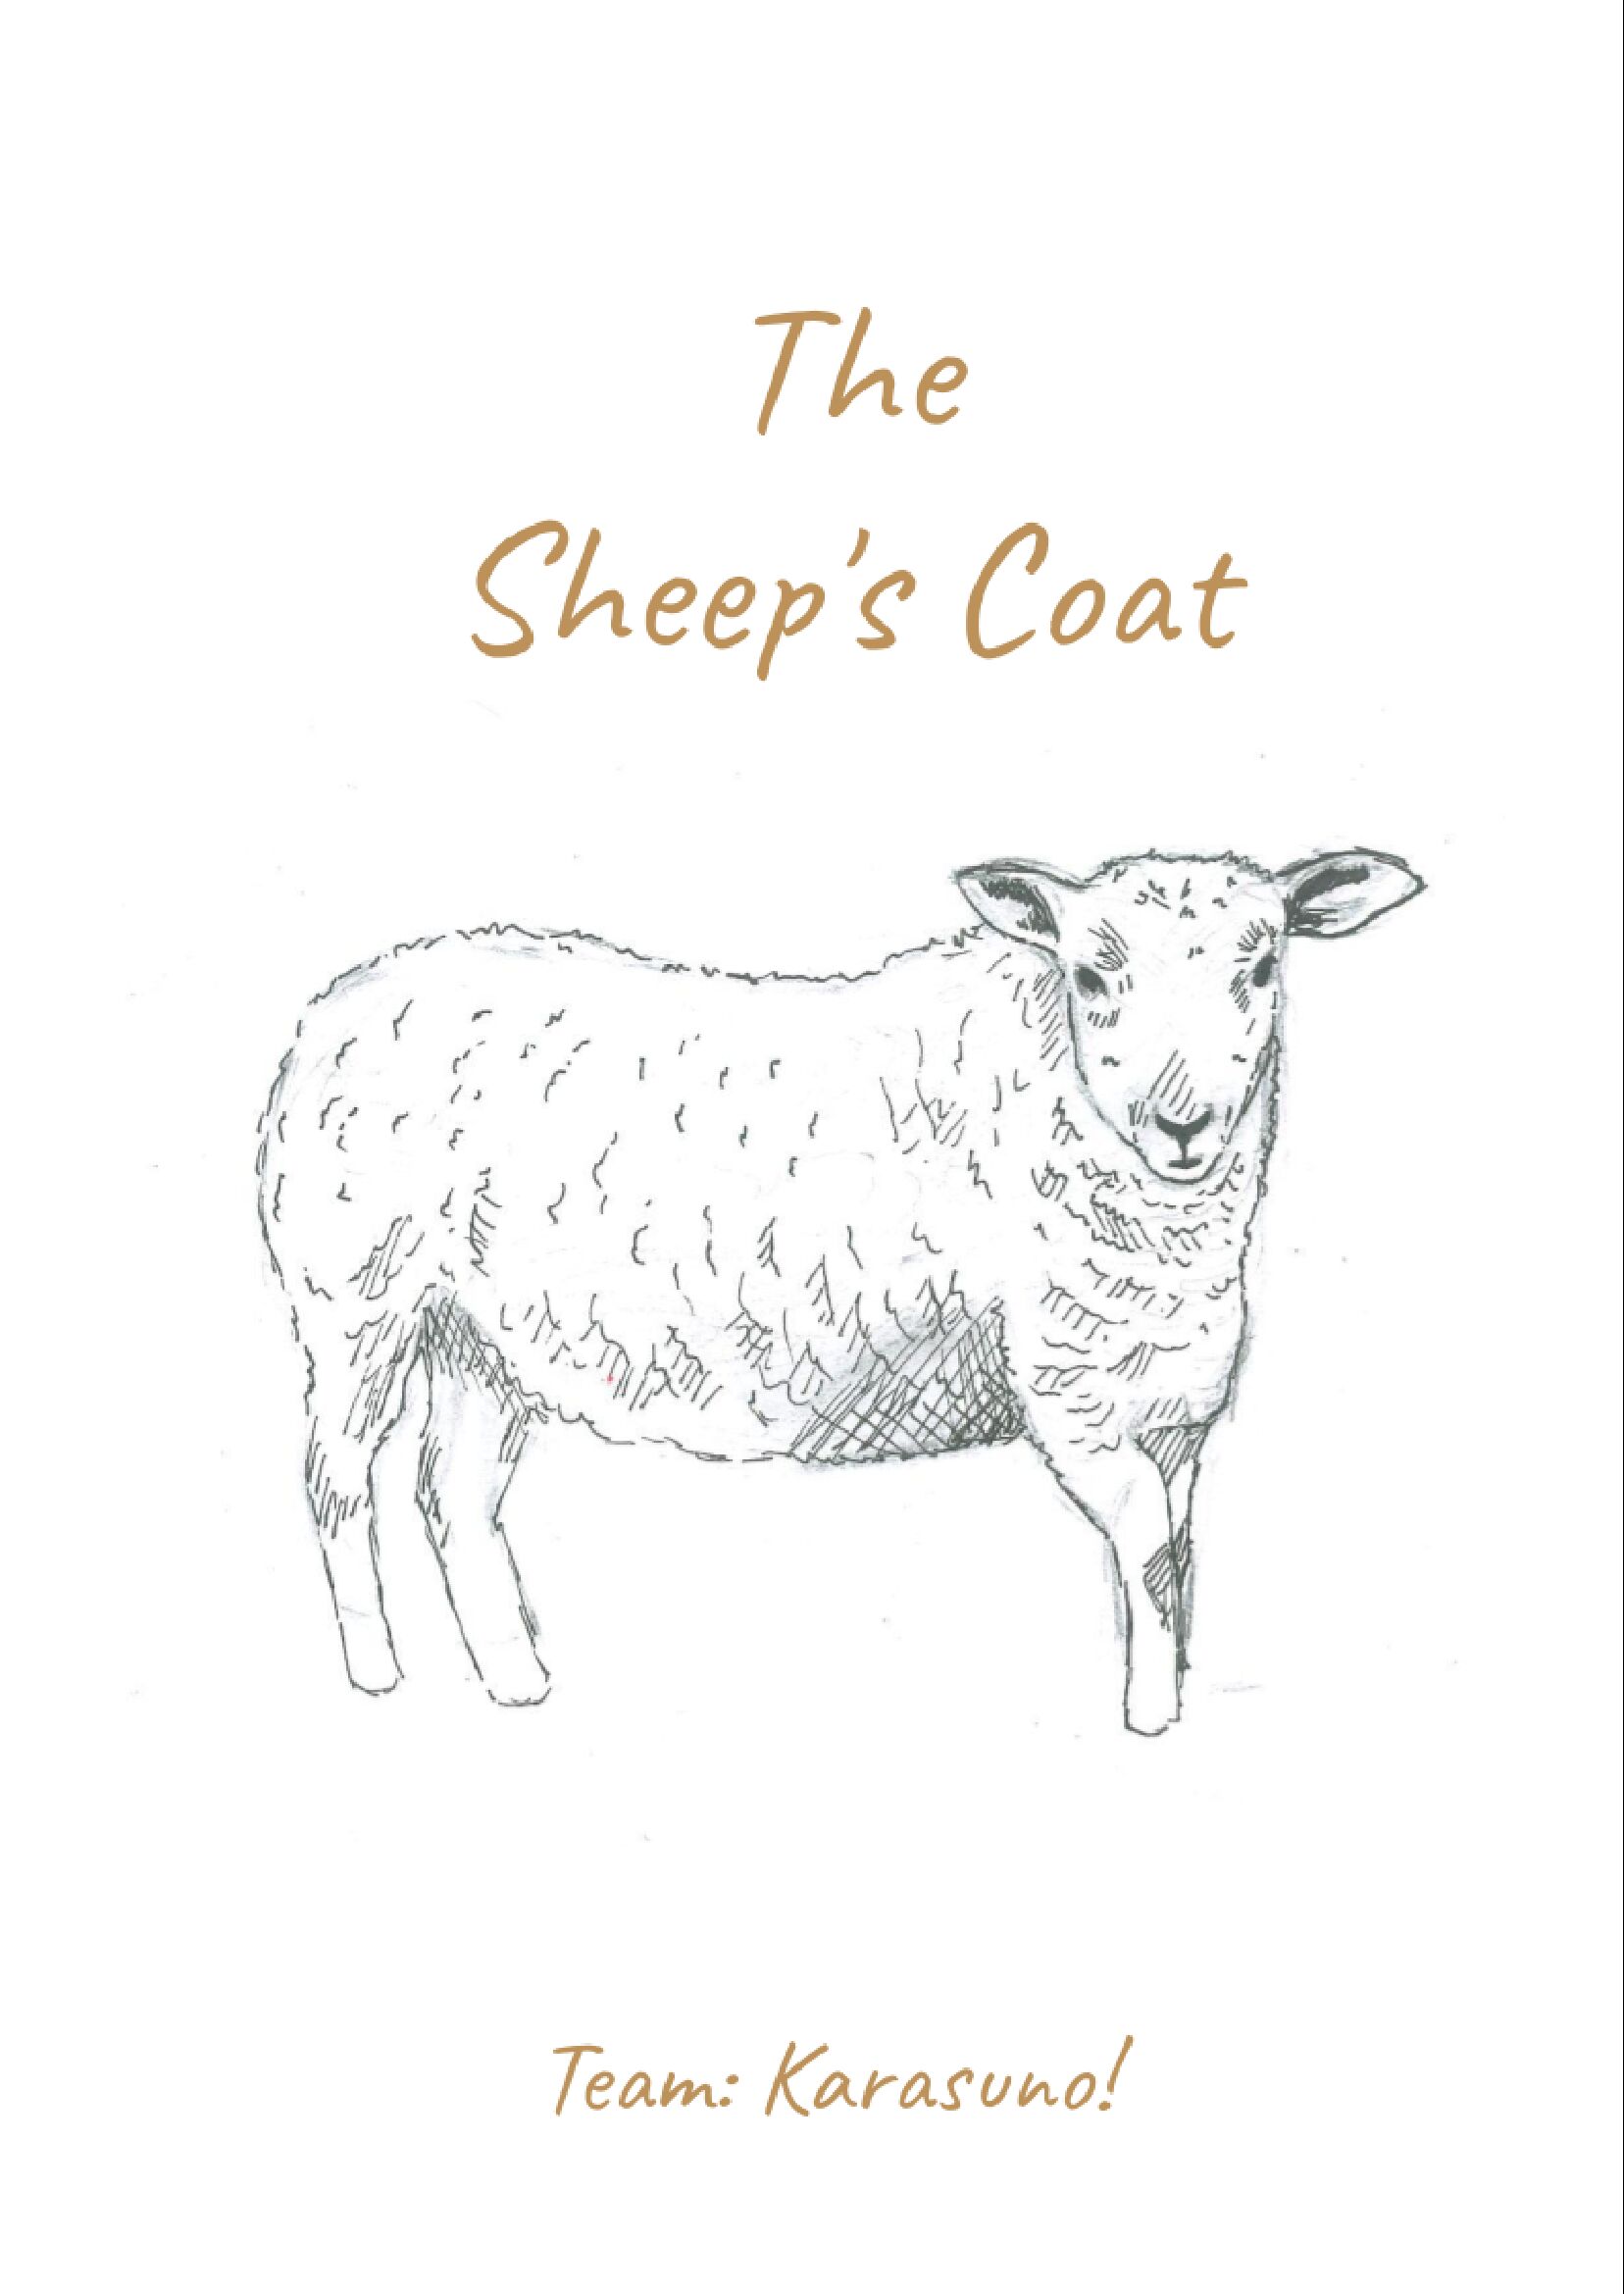 The Sheep's Coat